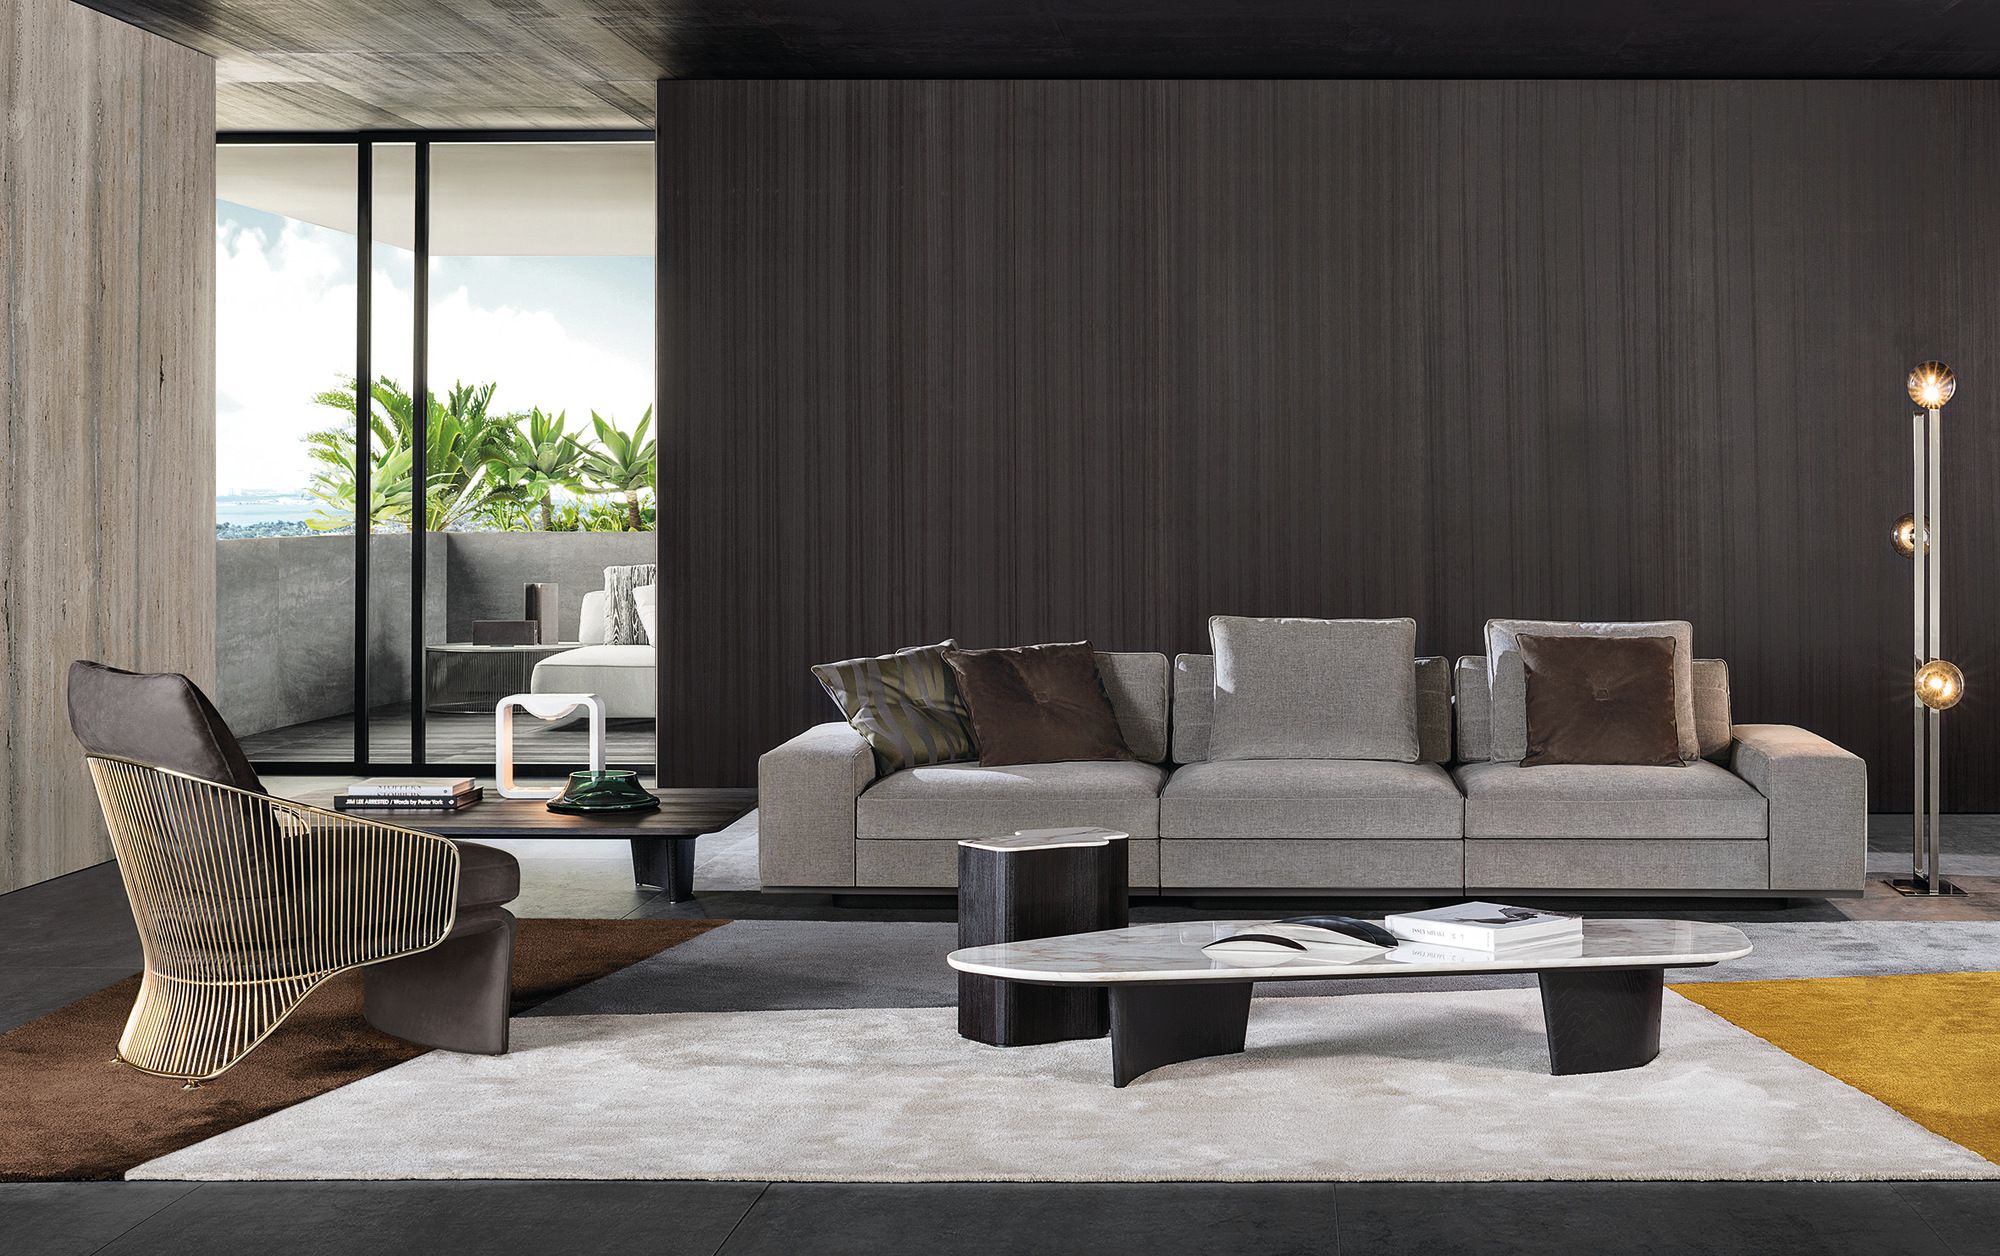 LAWRENCE CLAN Sofa By Minotti | design Rodolfo Dordoni